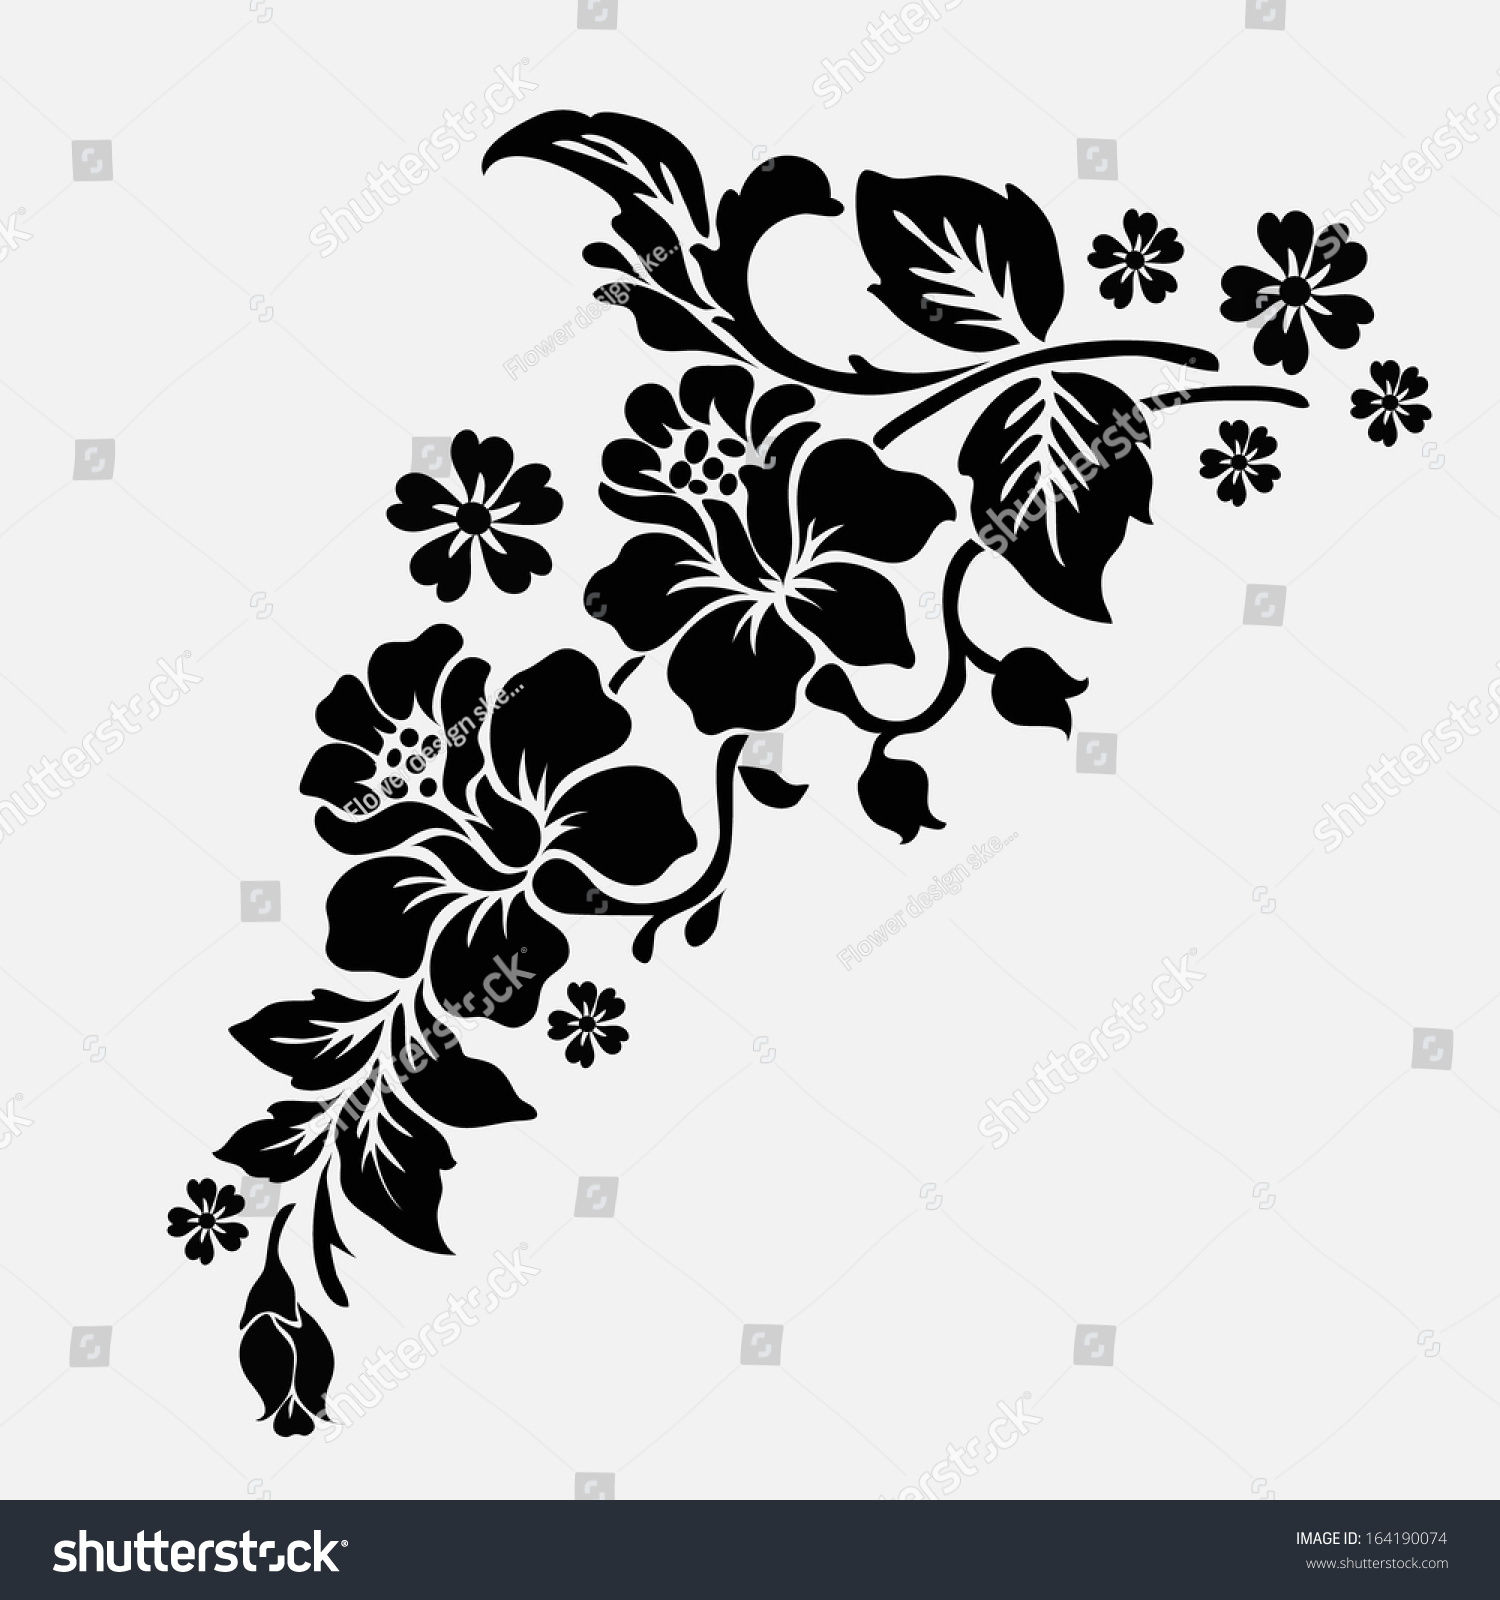 Flower Motif Vector Stock Vector 164190074 - Shutterstock